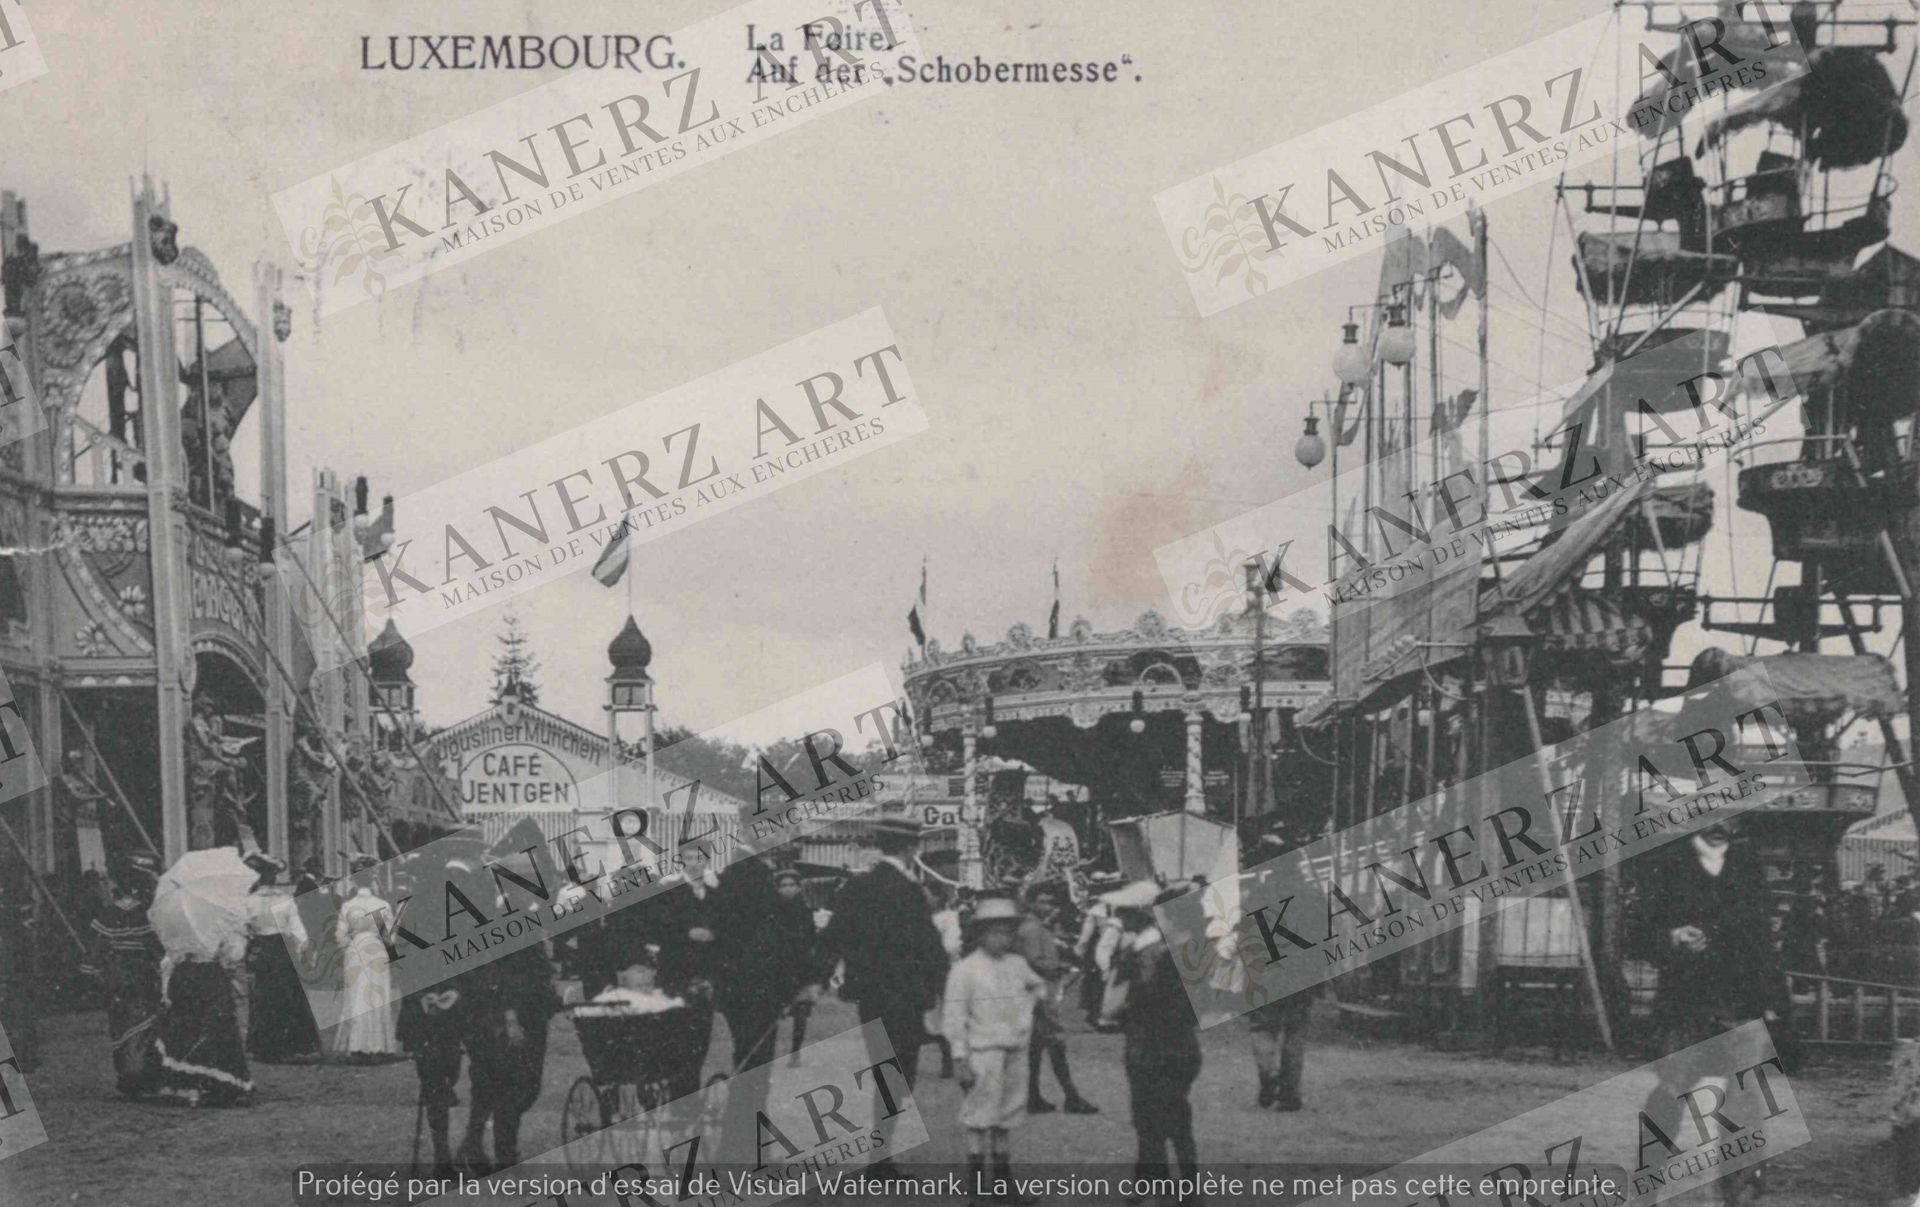 Null (OFICIAL/SCHOBERMESSE) Tarjeta postal del Schueberfouer "La Foire. Auf der &hellip;